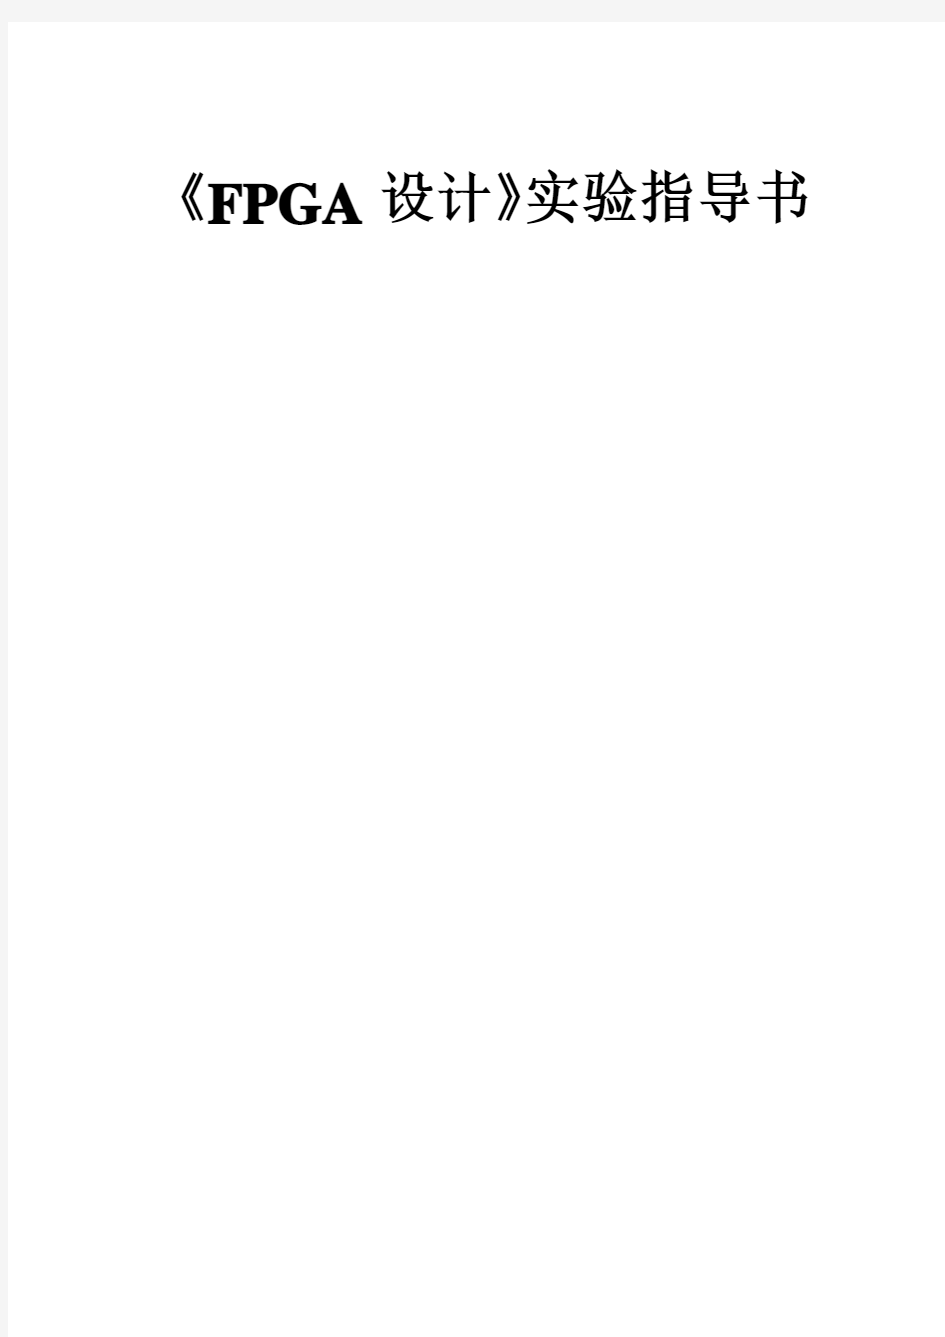 FPGA设计实验指导书